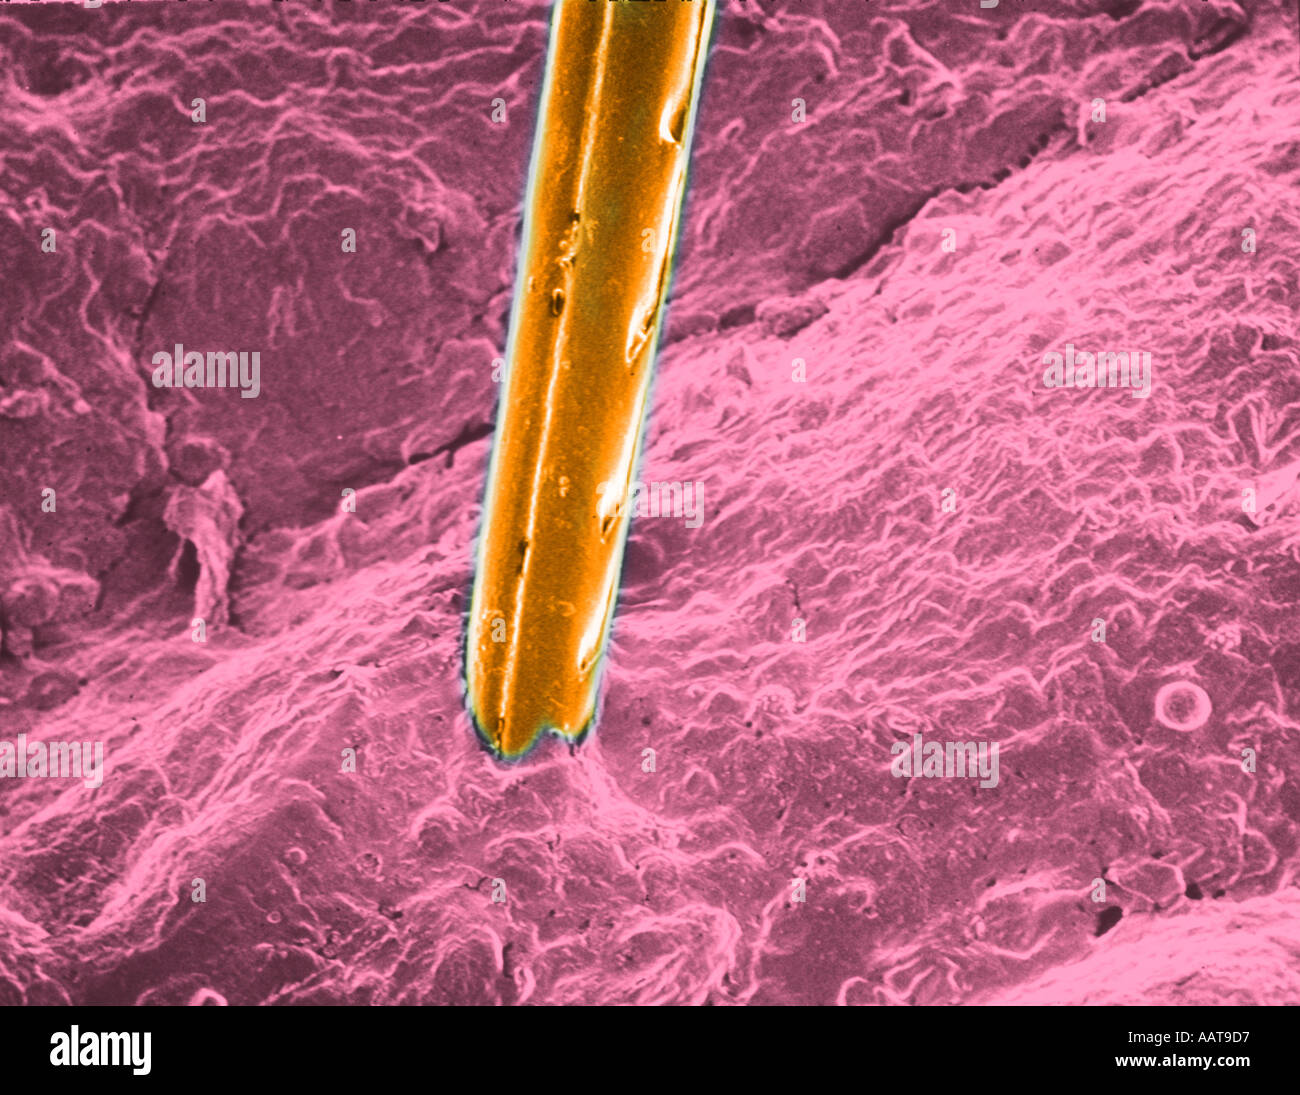 Honeybee stinger by scanning electron microscopy Stock Photo